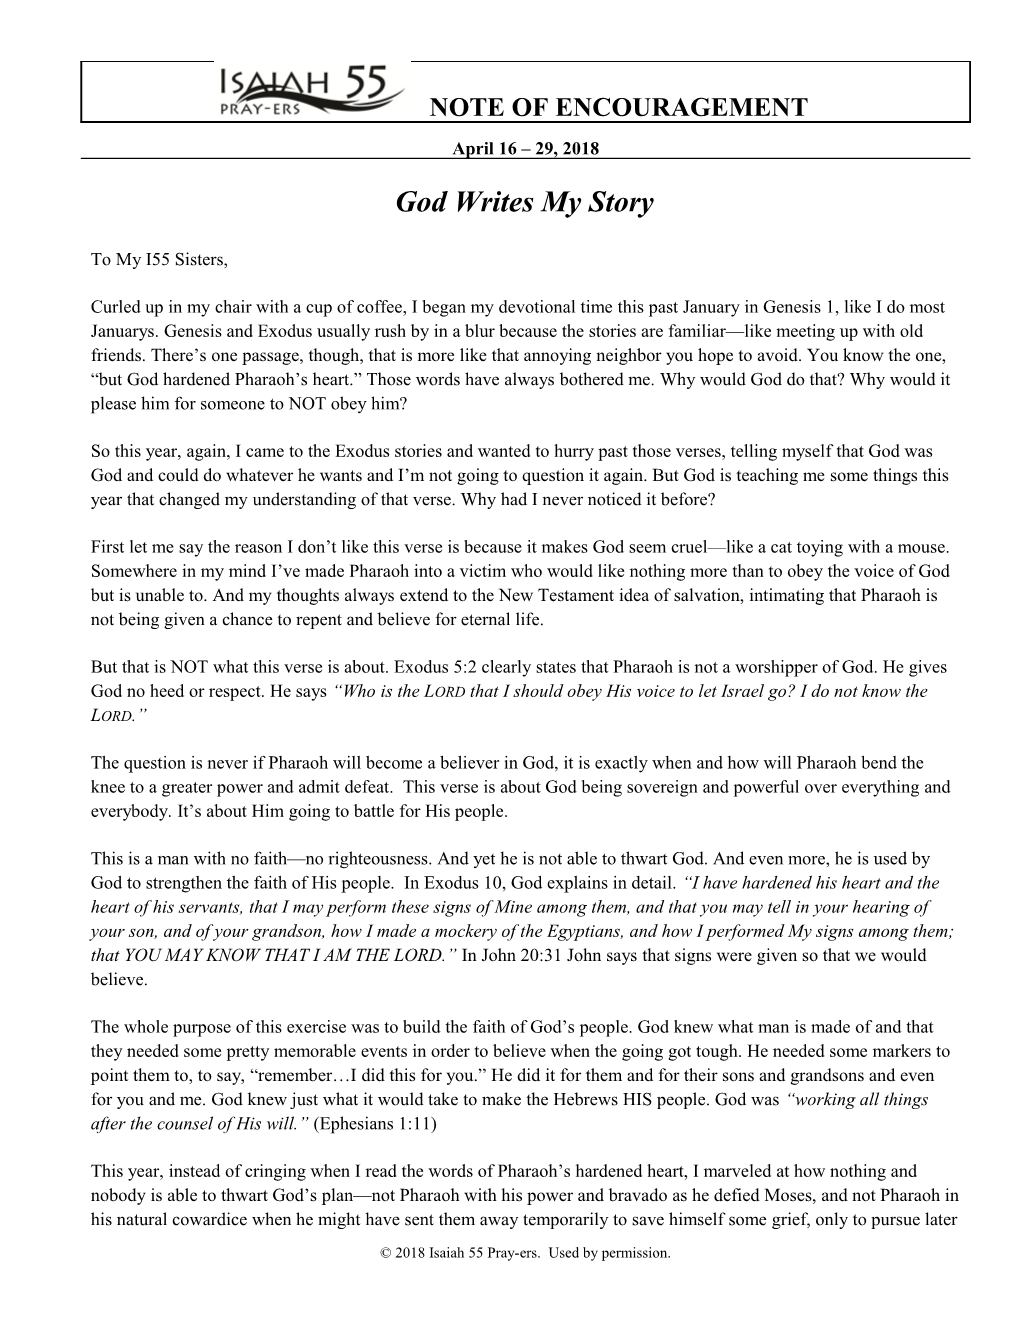 God Writes My Story